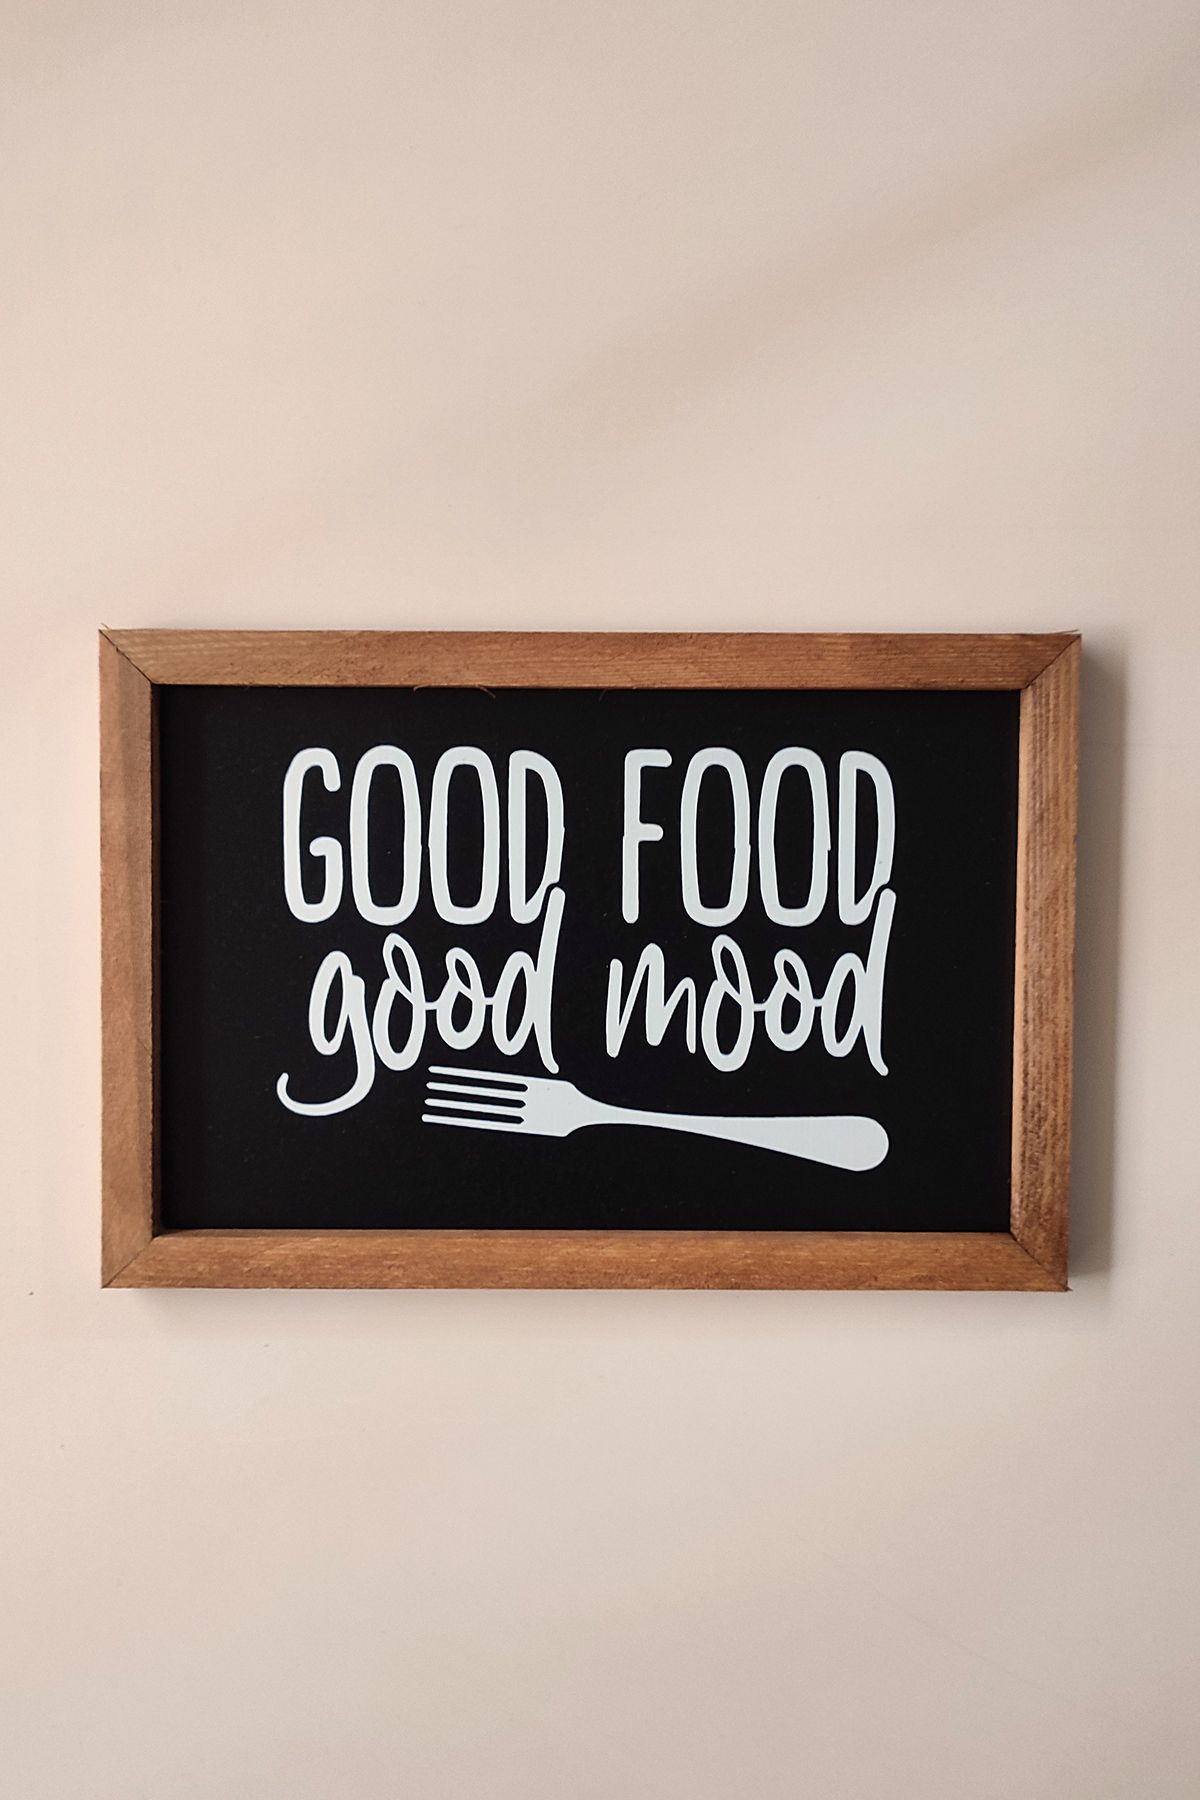 Wooden Factory "Good Food Good Mood" Mutfak için Ahşap Tablo, "İyi Yemek İyi Ruh Hali"